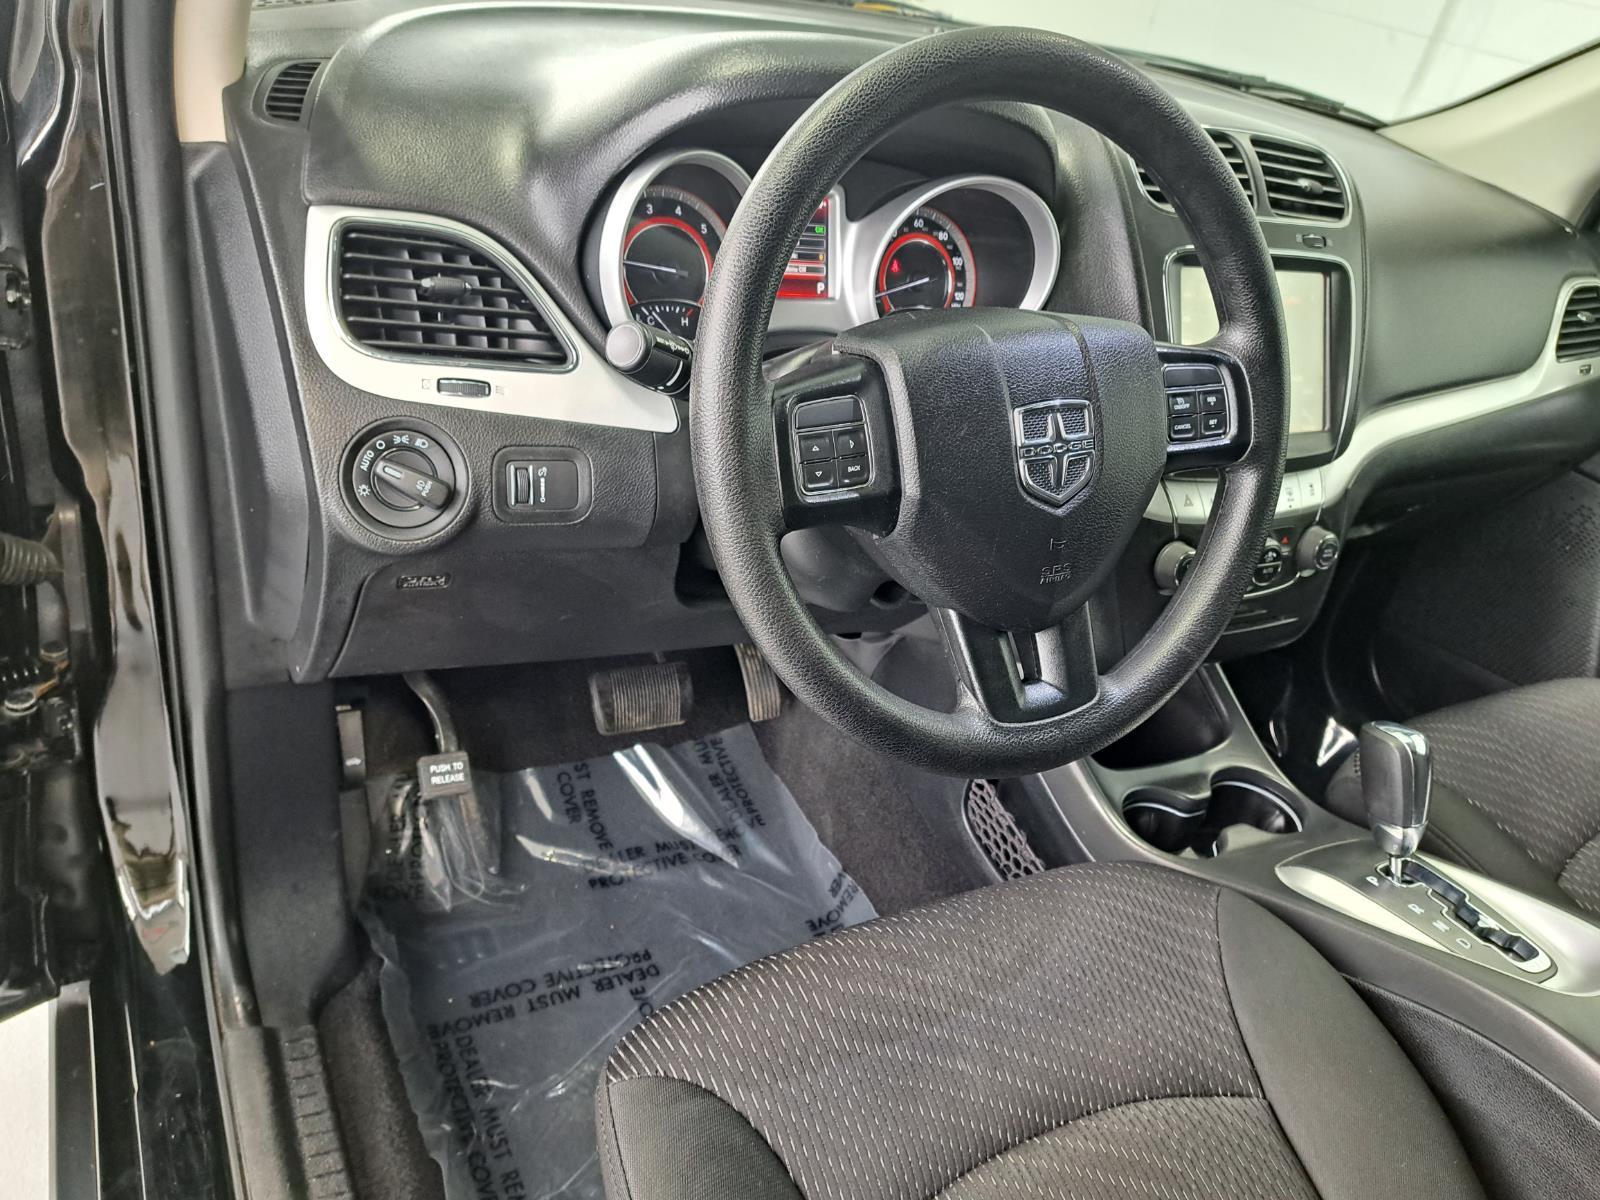 2019 Dodge Journey SE SUV Front Wheel Drive 8